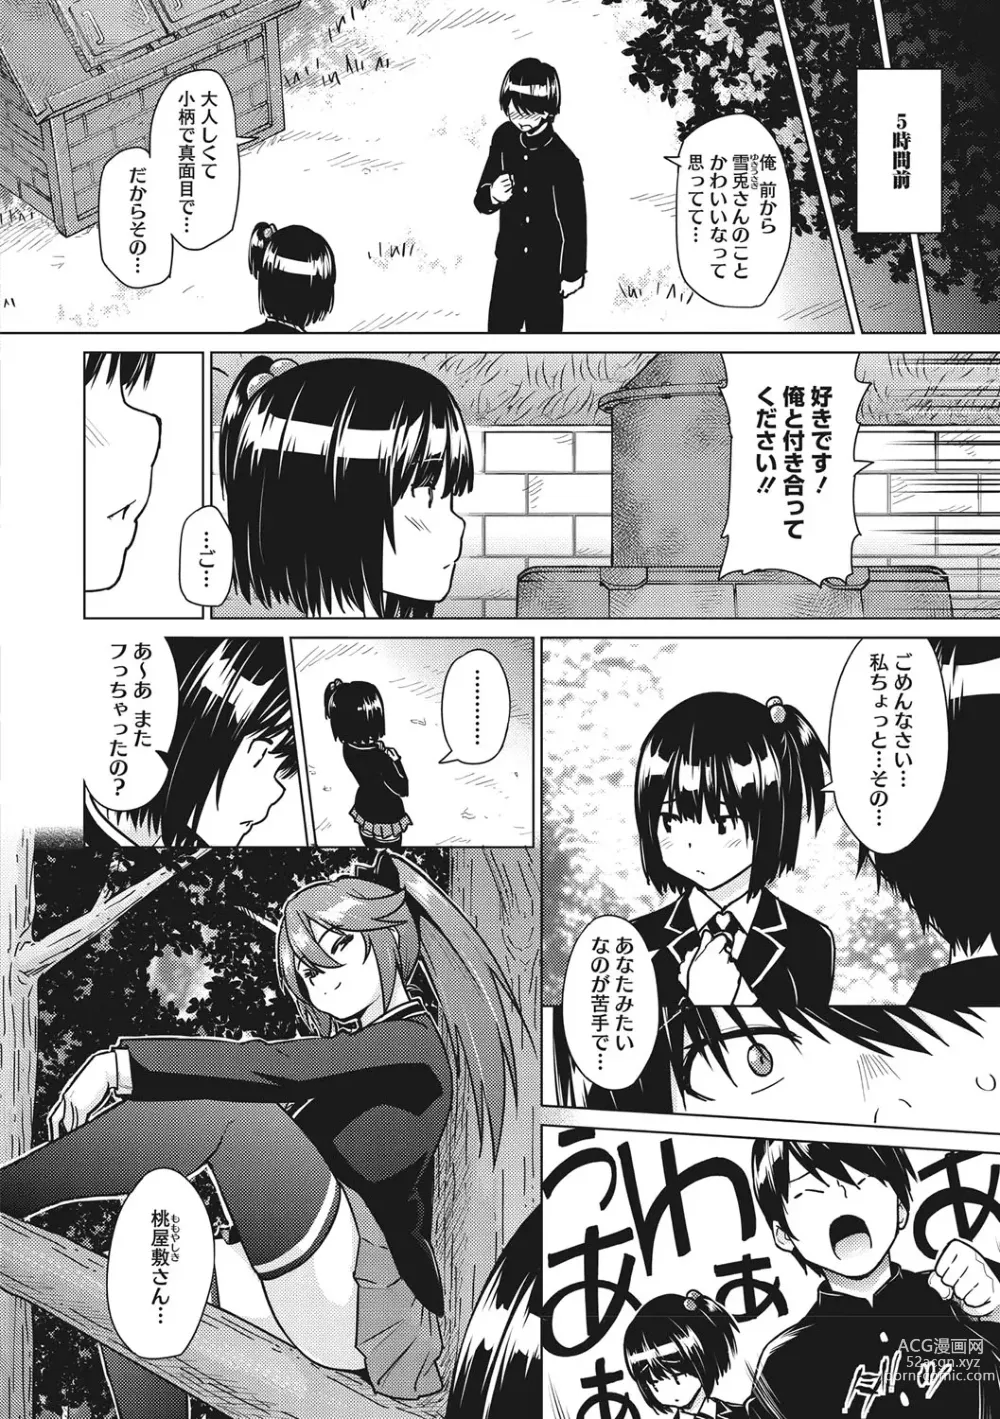 Page 5 of manga Netorare Onapet